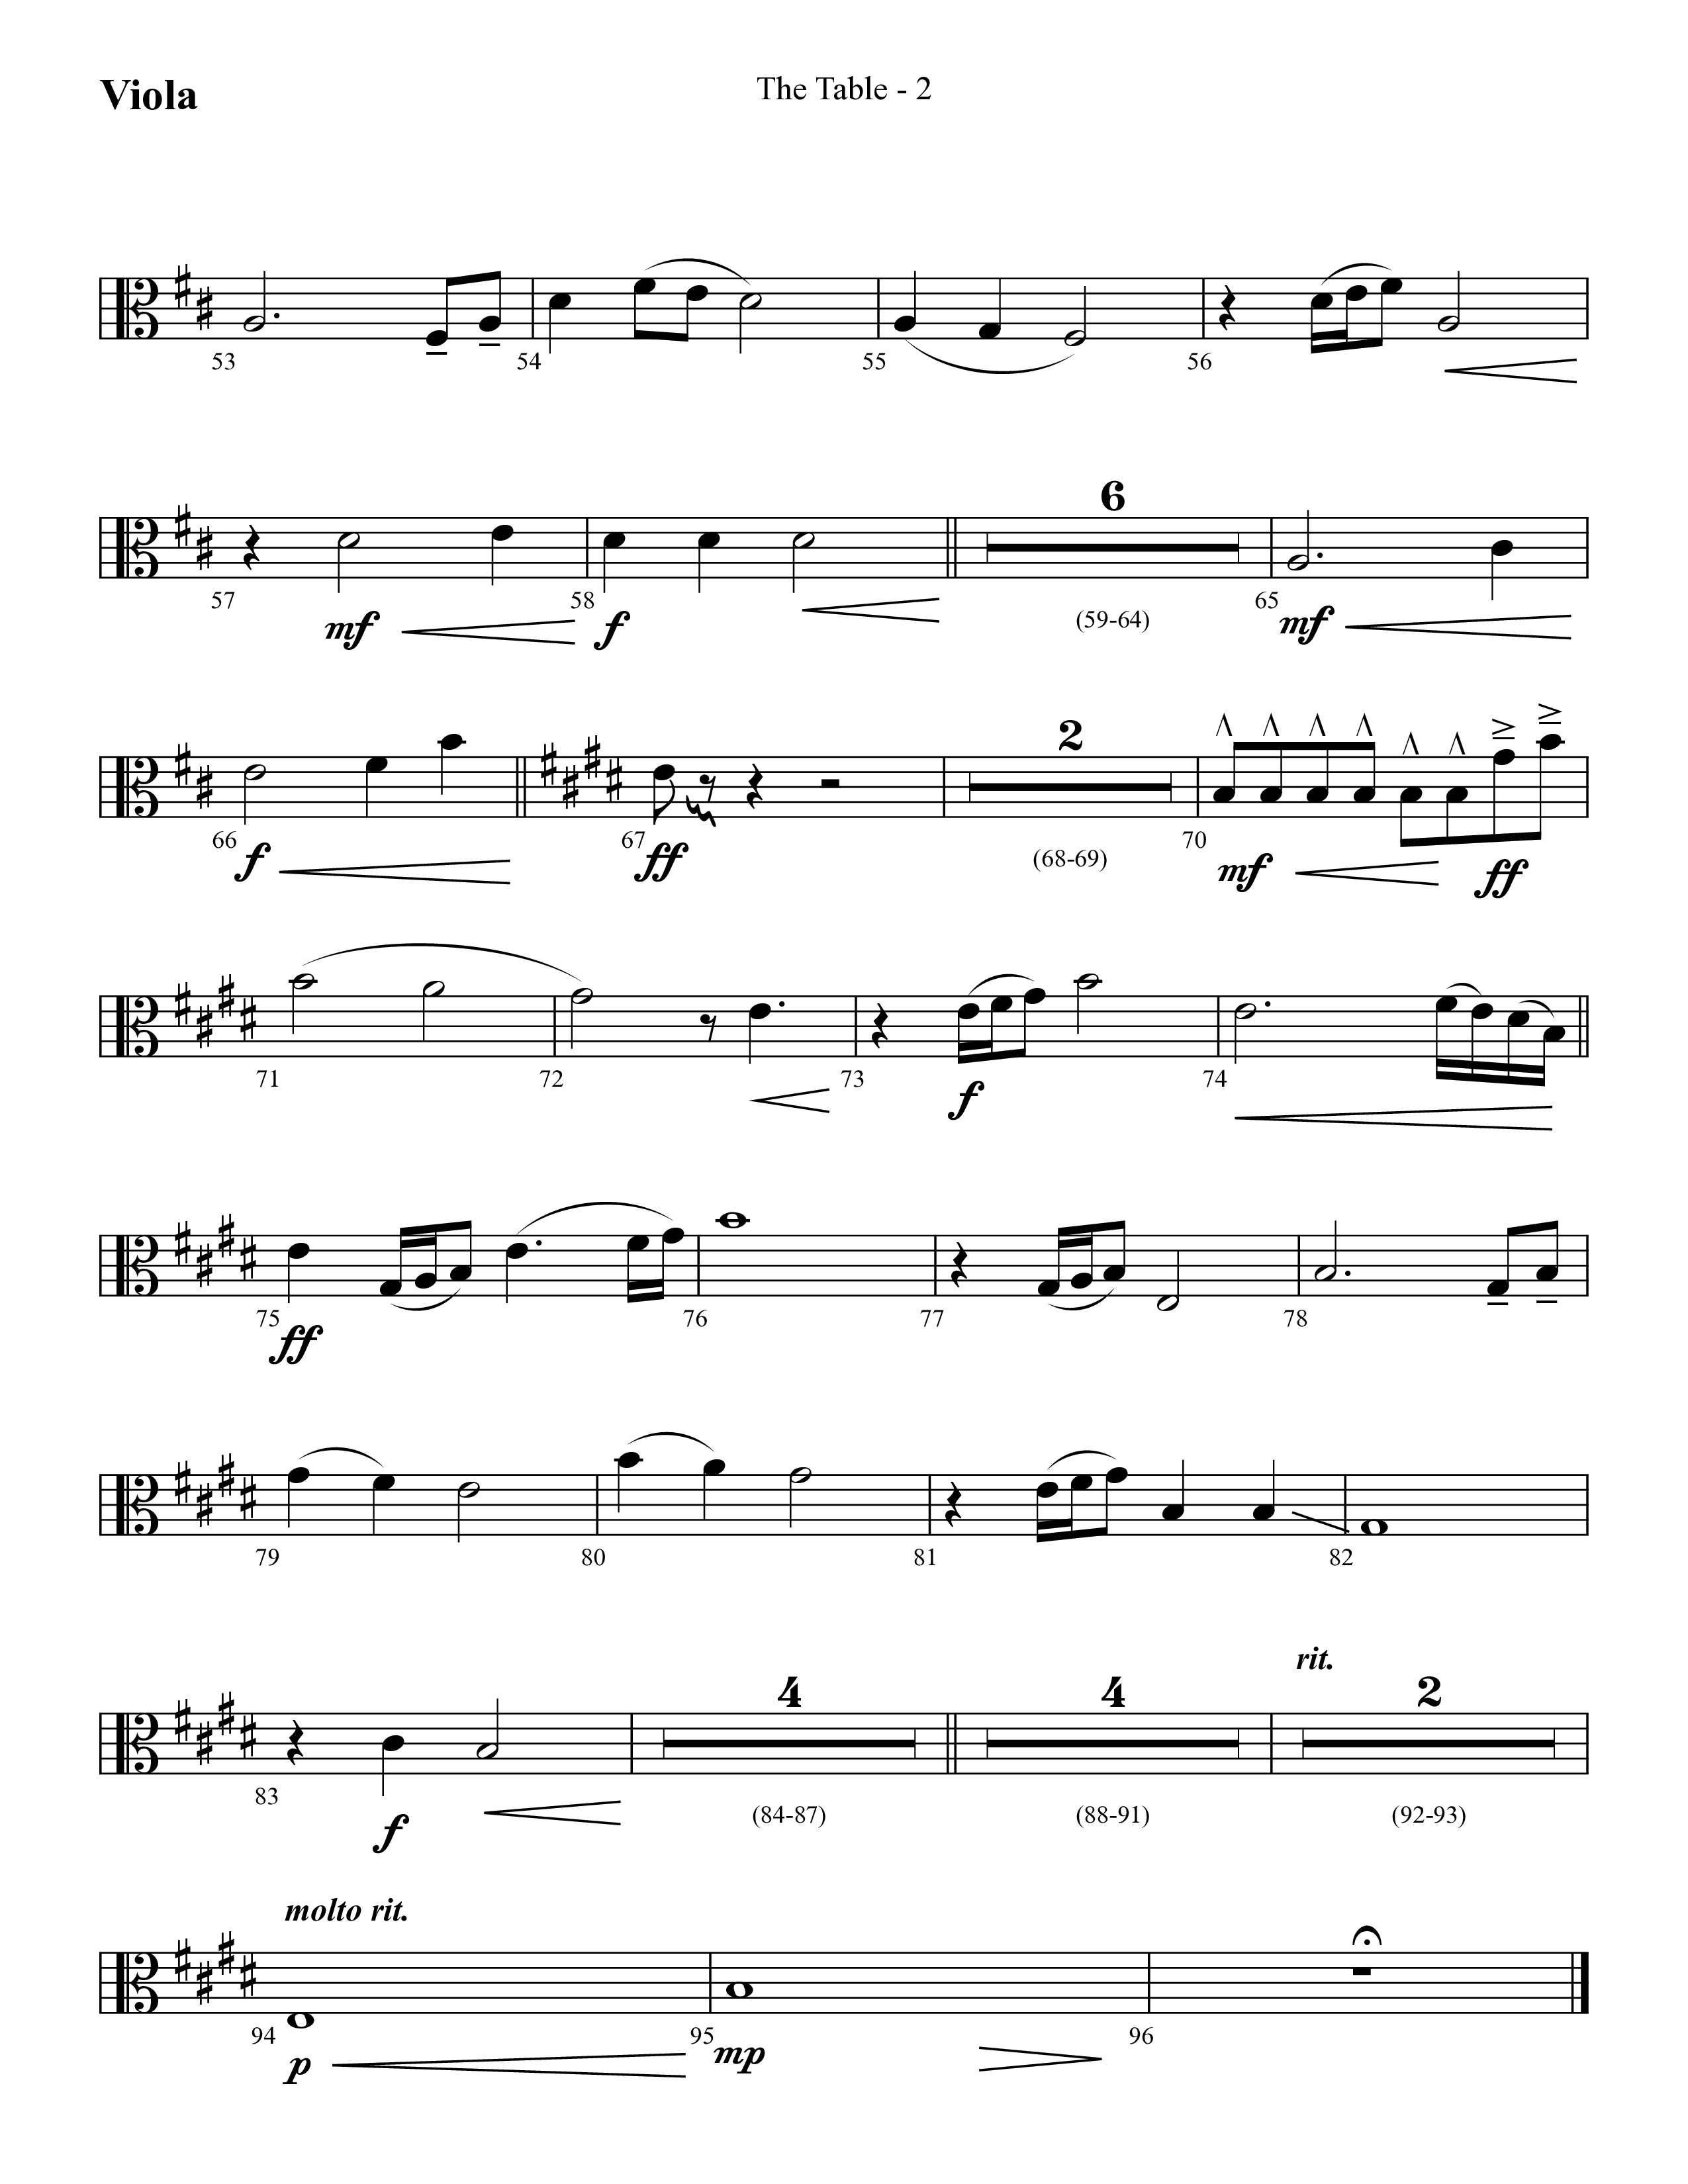 The Table (Choral Anthem SATB) Viola (Lifeway Choral / Arr. Cliff Duren)